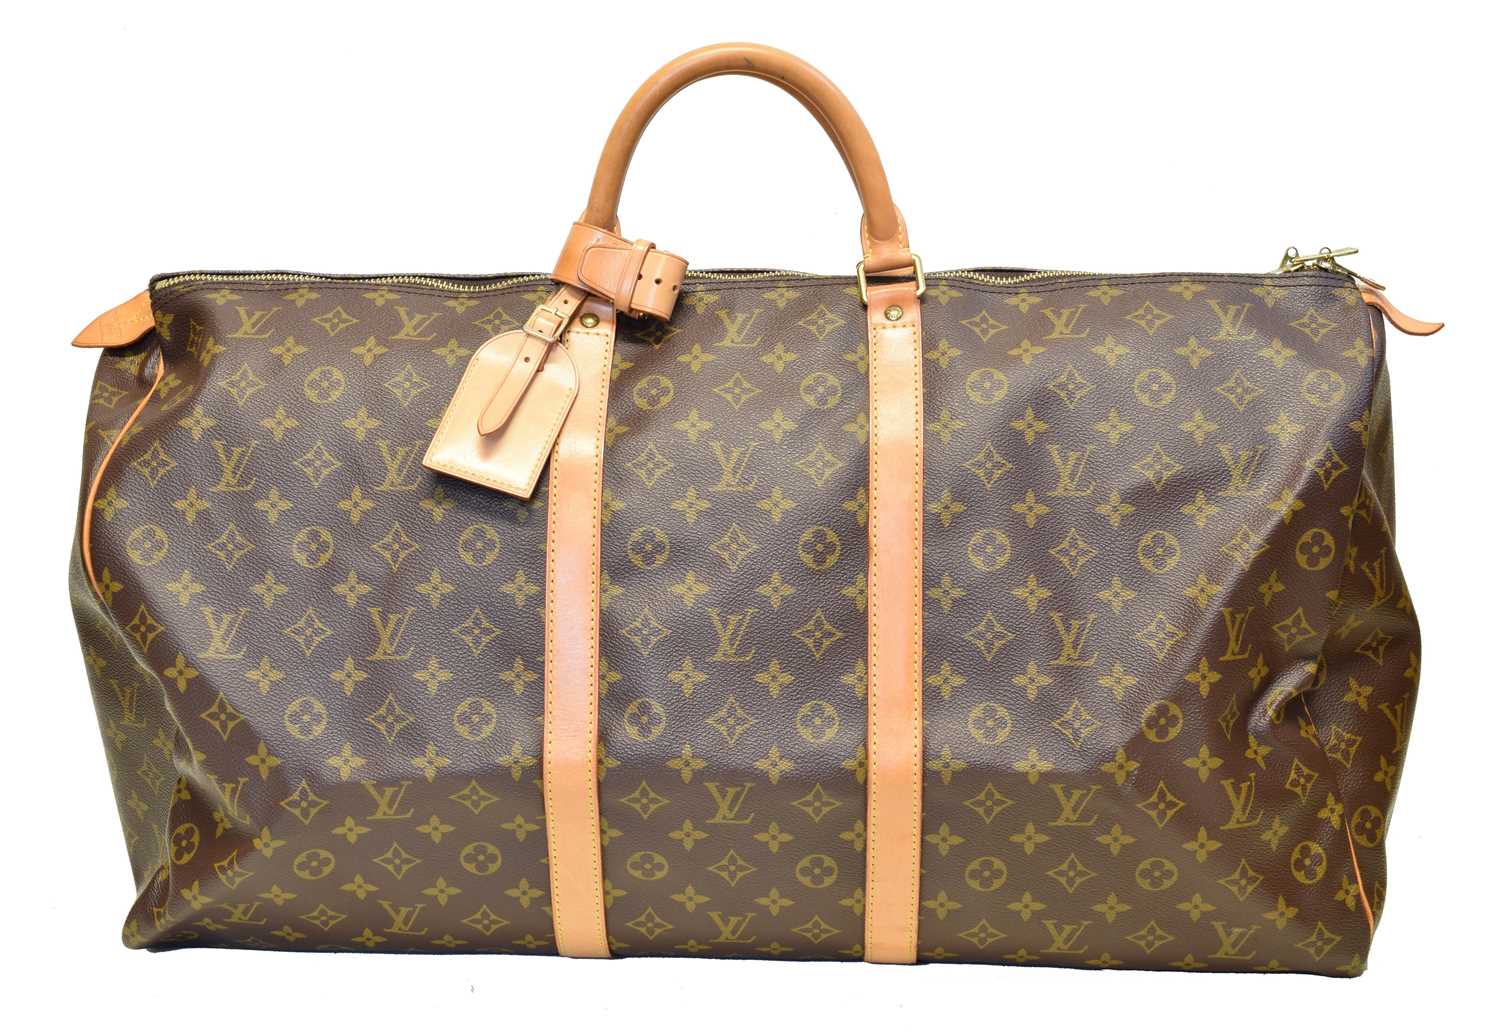 A Louis Vuitton monogram Keepall 60 luggage bag, - Image 2 of 2